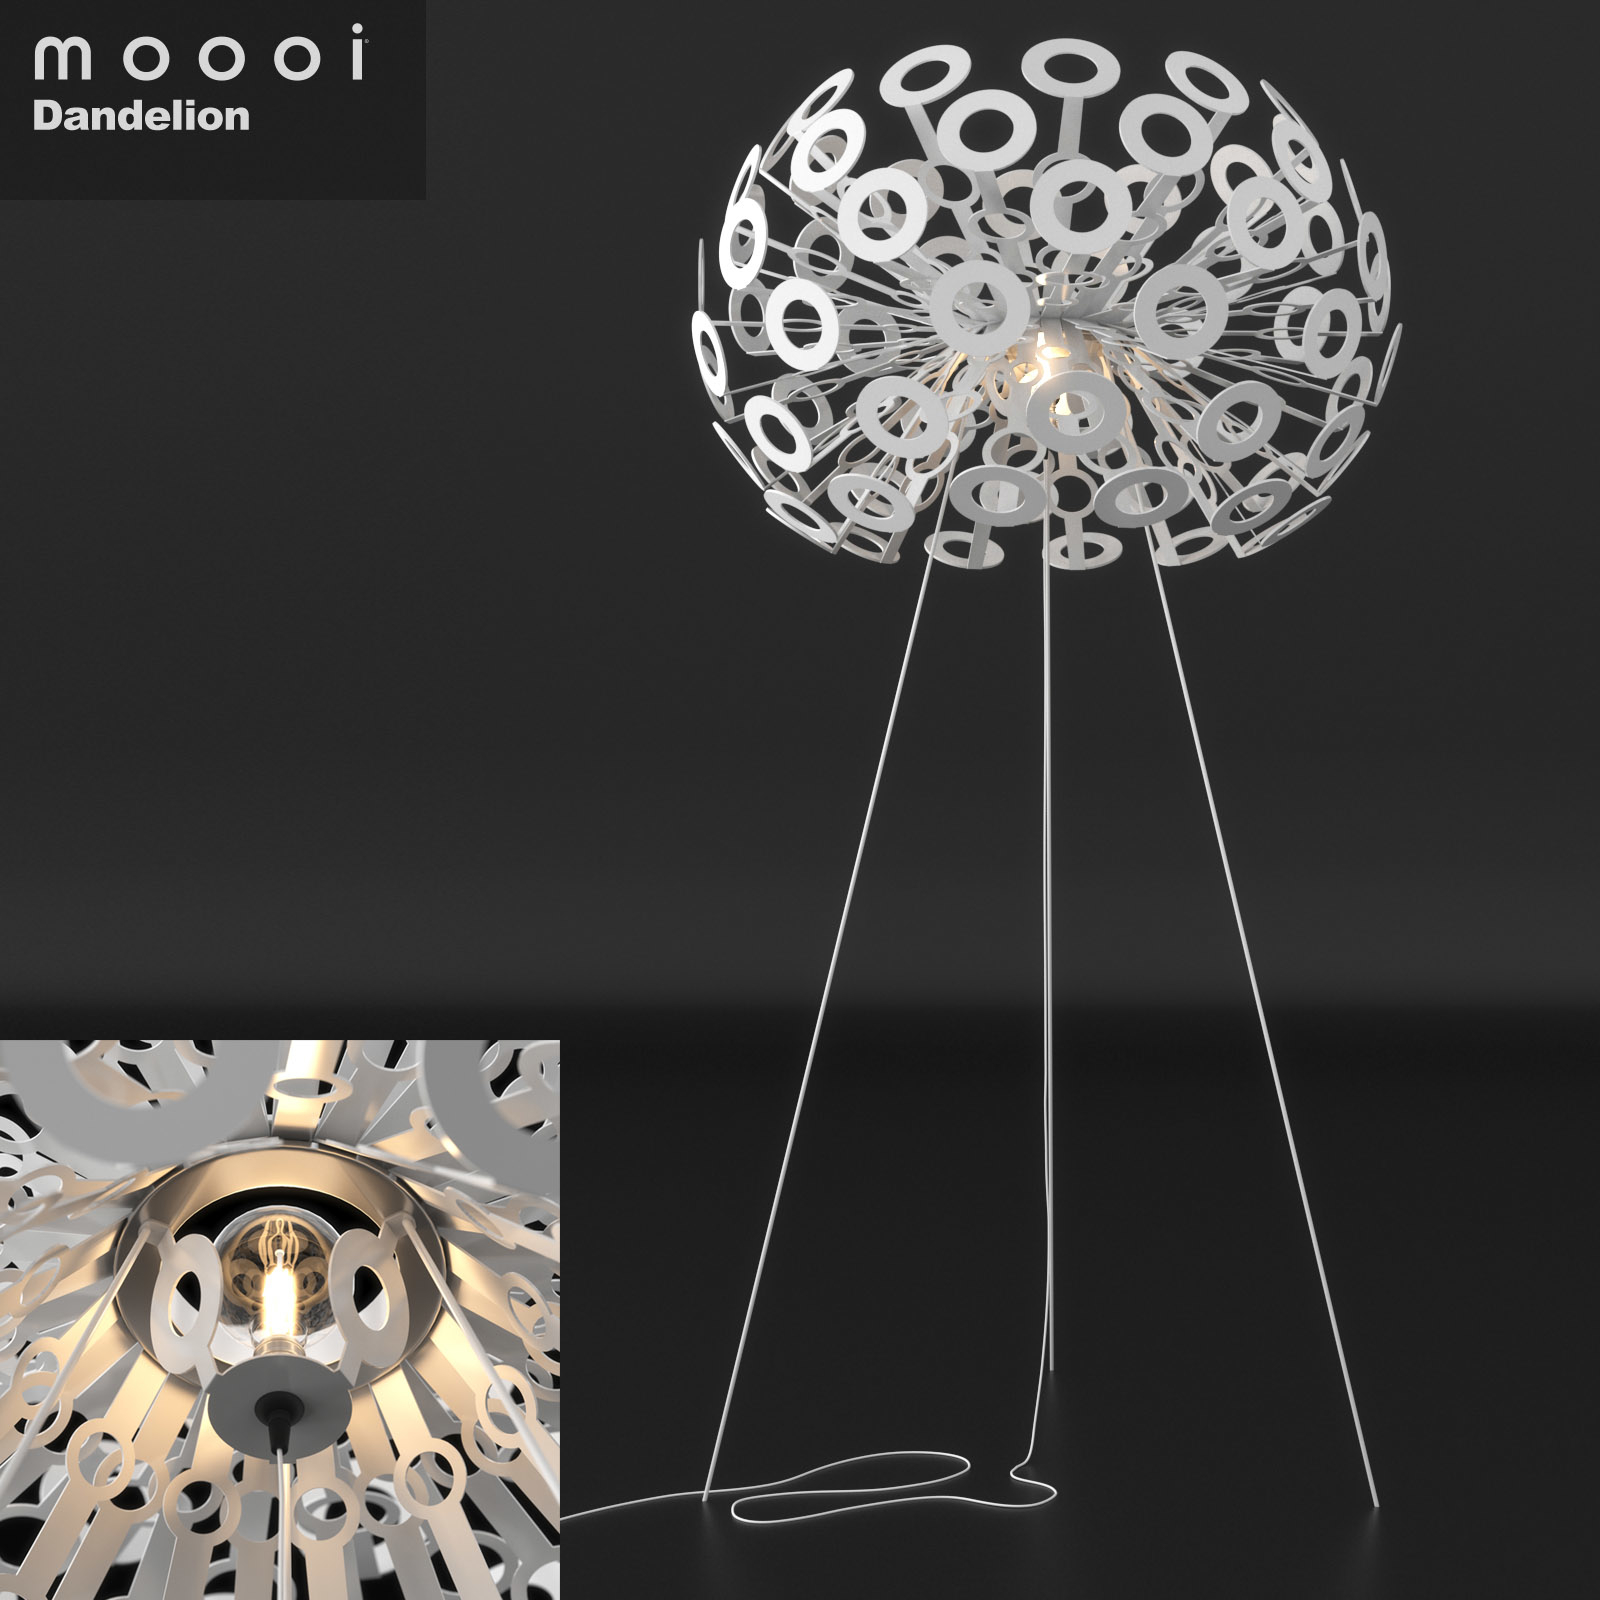 High Poly Moooi Dandelion Floor Lamp Detailed 3d Model throughout measurements 1600 X 1600